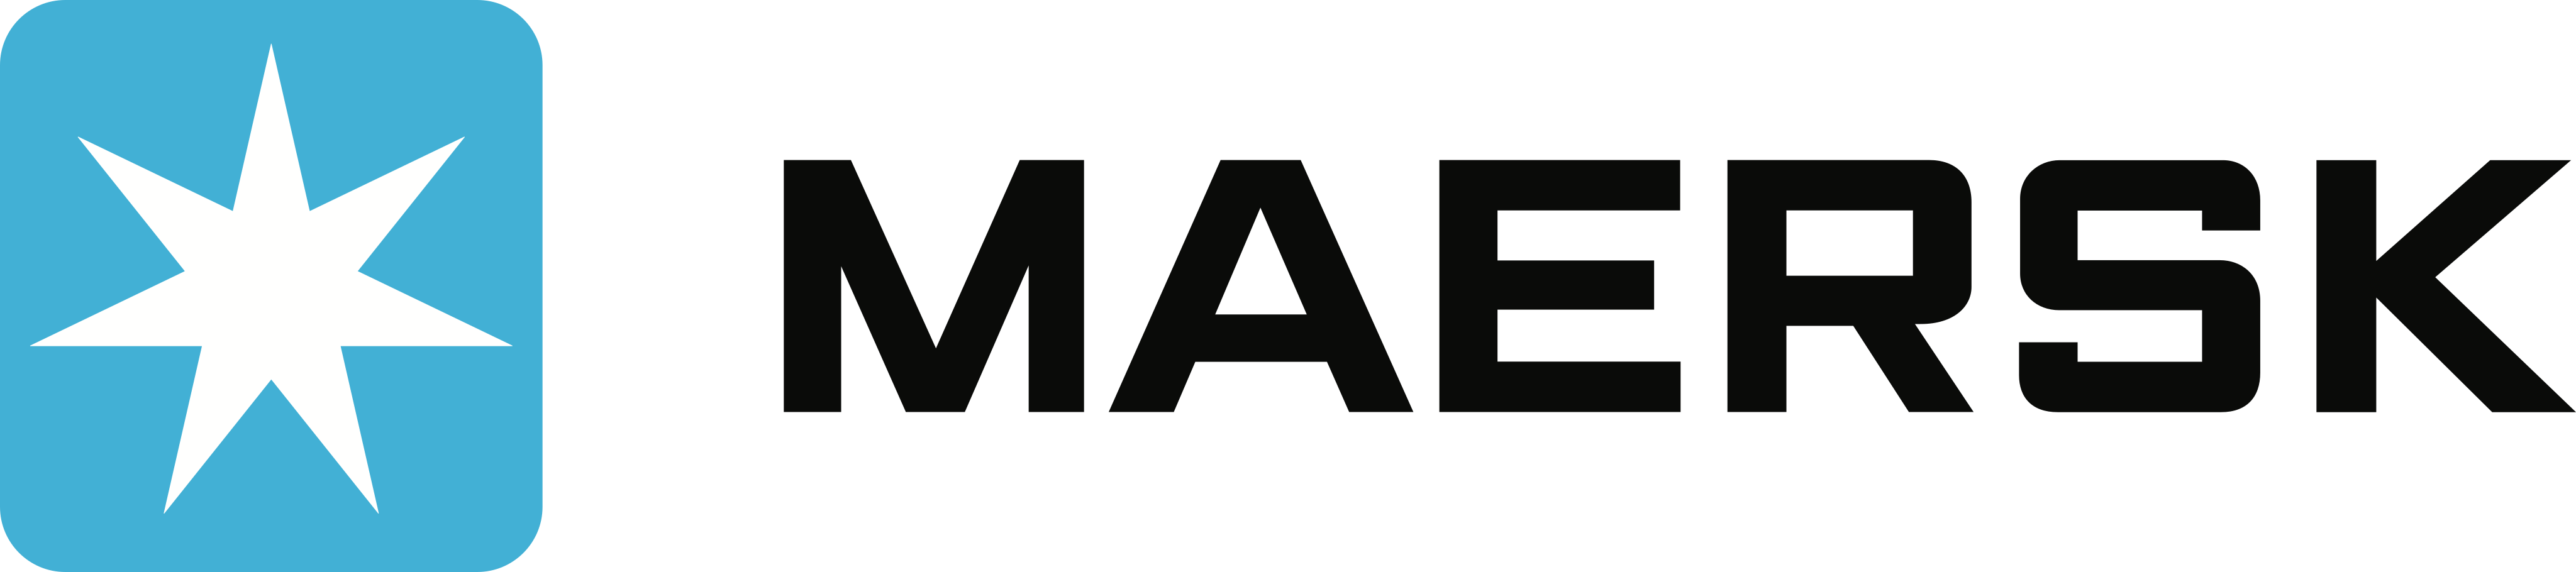 maersk logo - Maersk Logo